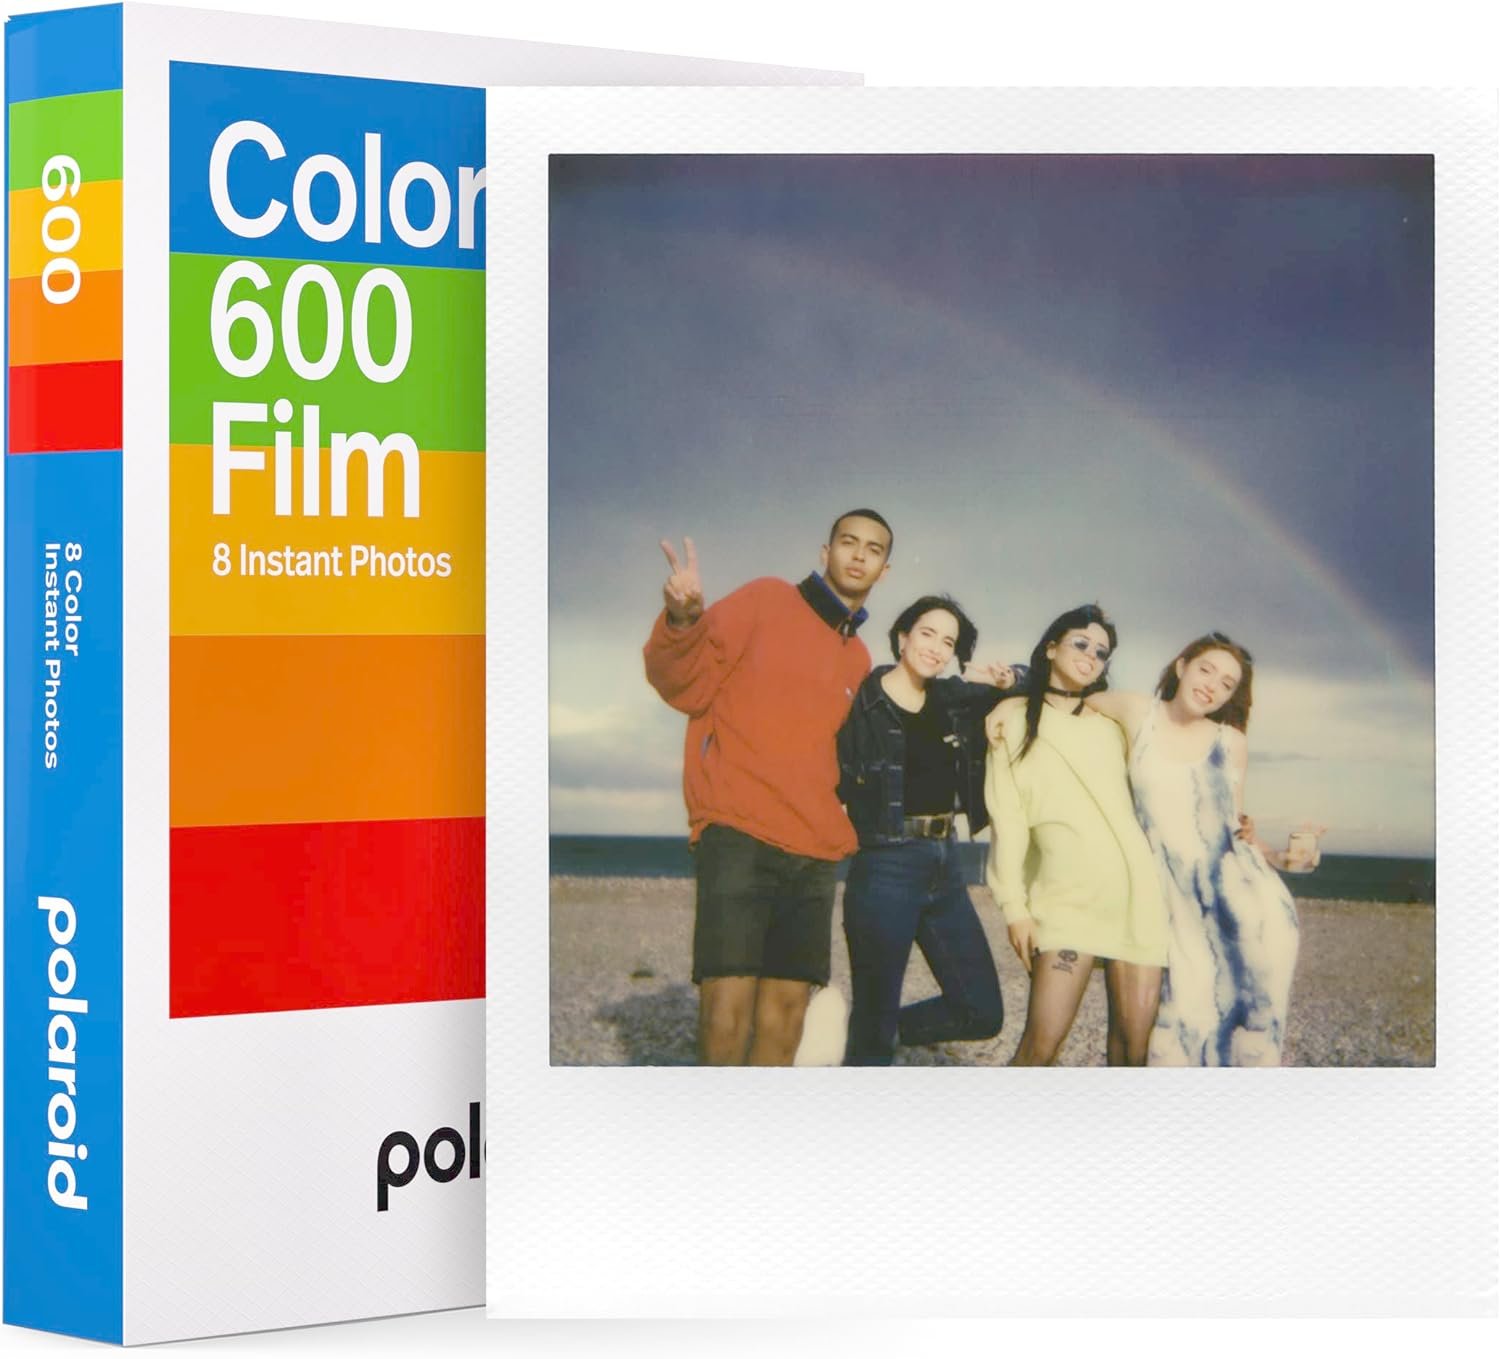 Polaroid I-Type Color — Glass Key Photo